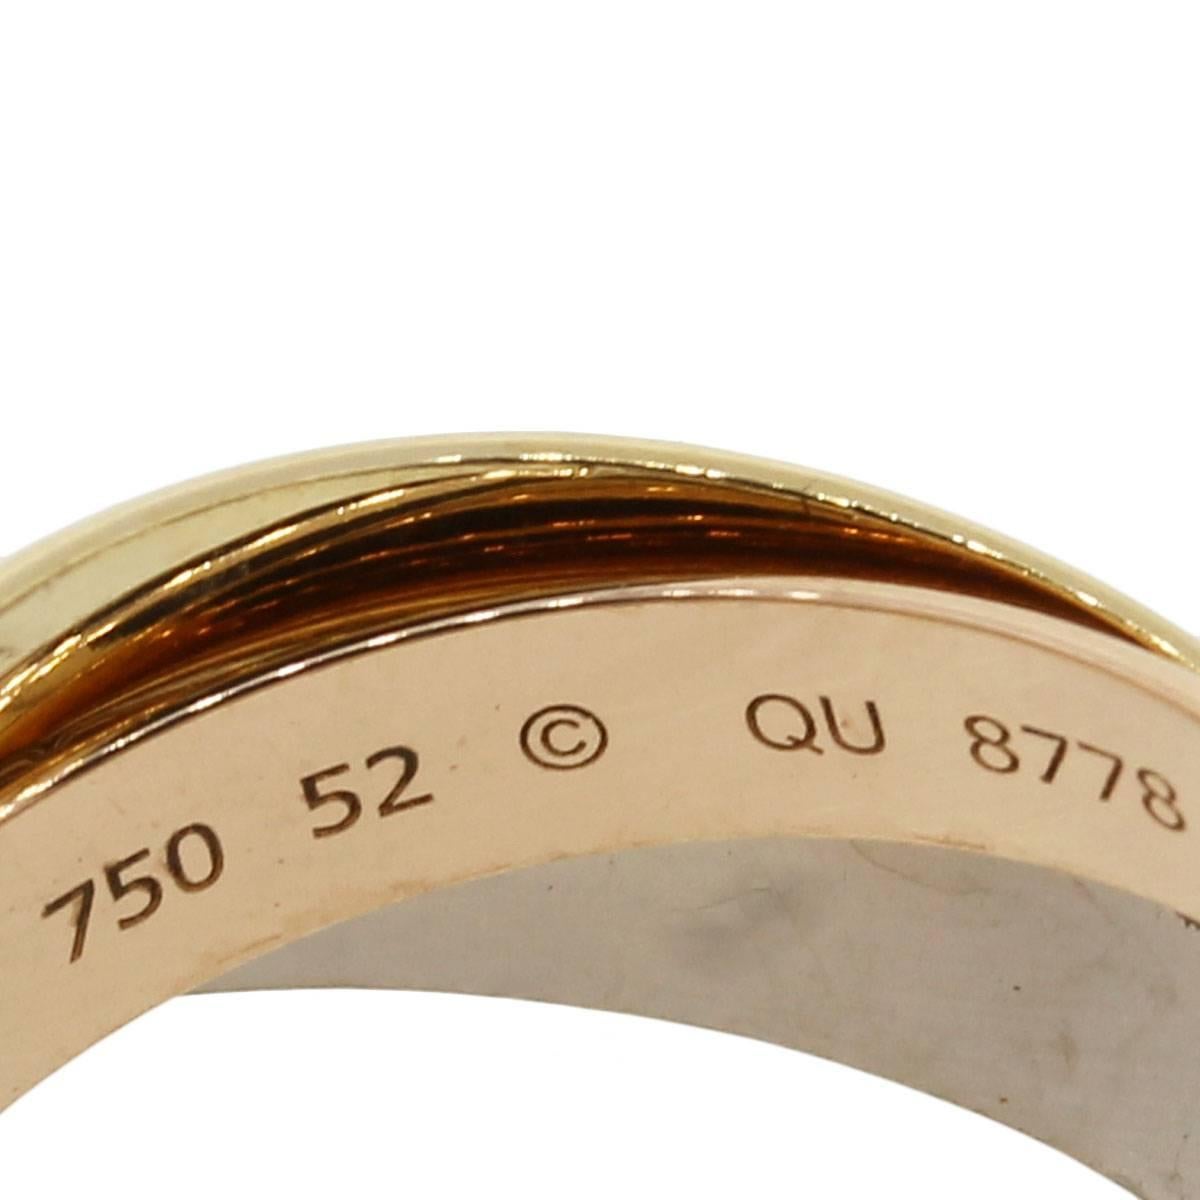  Tri Color Gold Ring Size 52 In New Condition In Boca Raton, FL